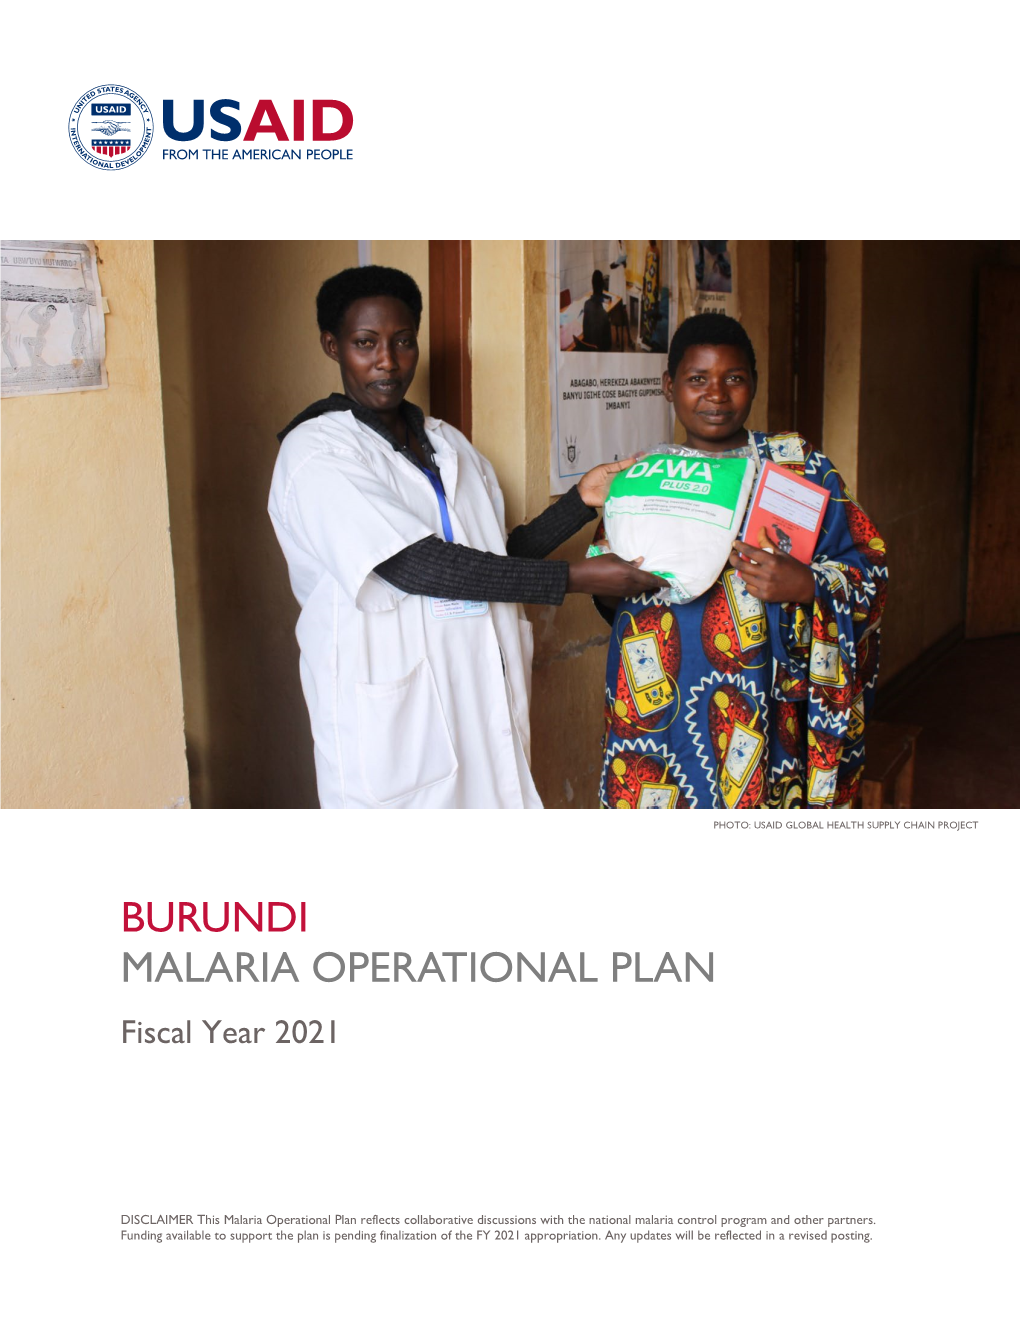 BURUNDI MALARIA OPERATIONAL PLAN Fiscal Year 2021